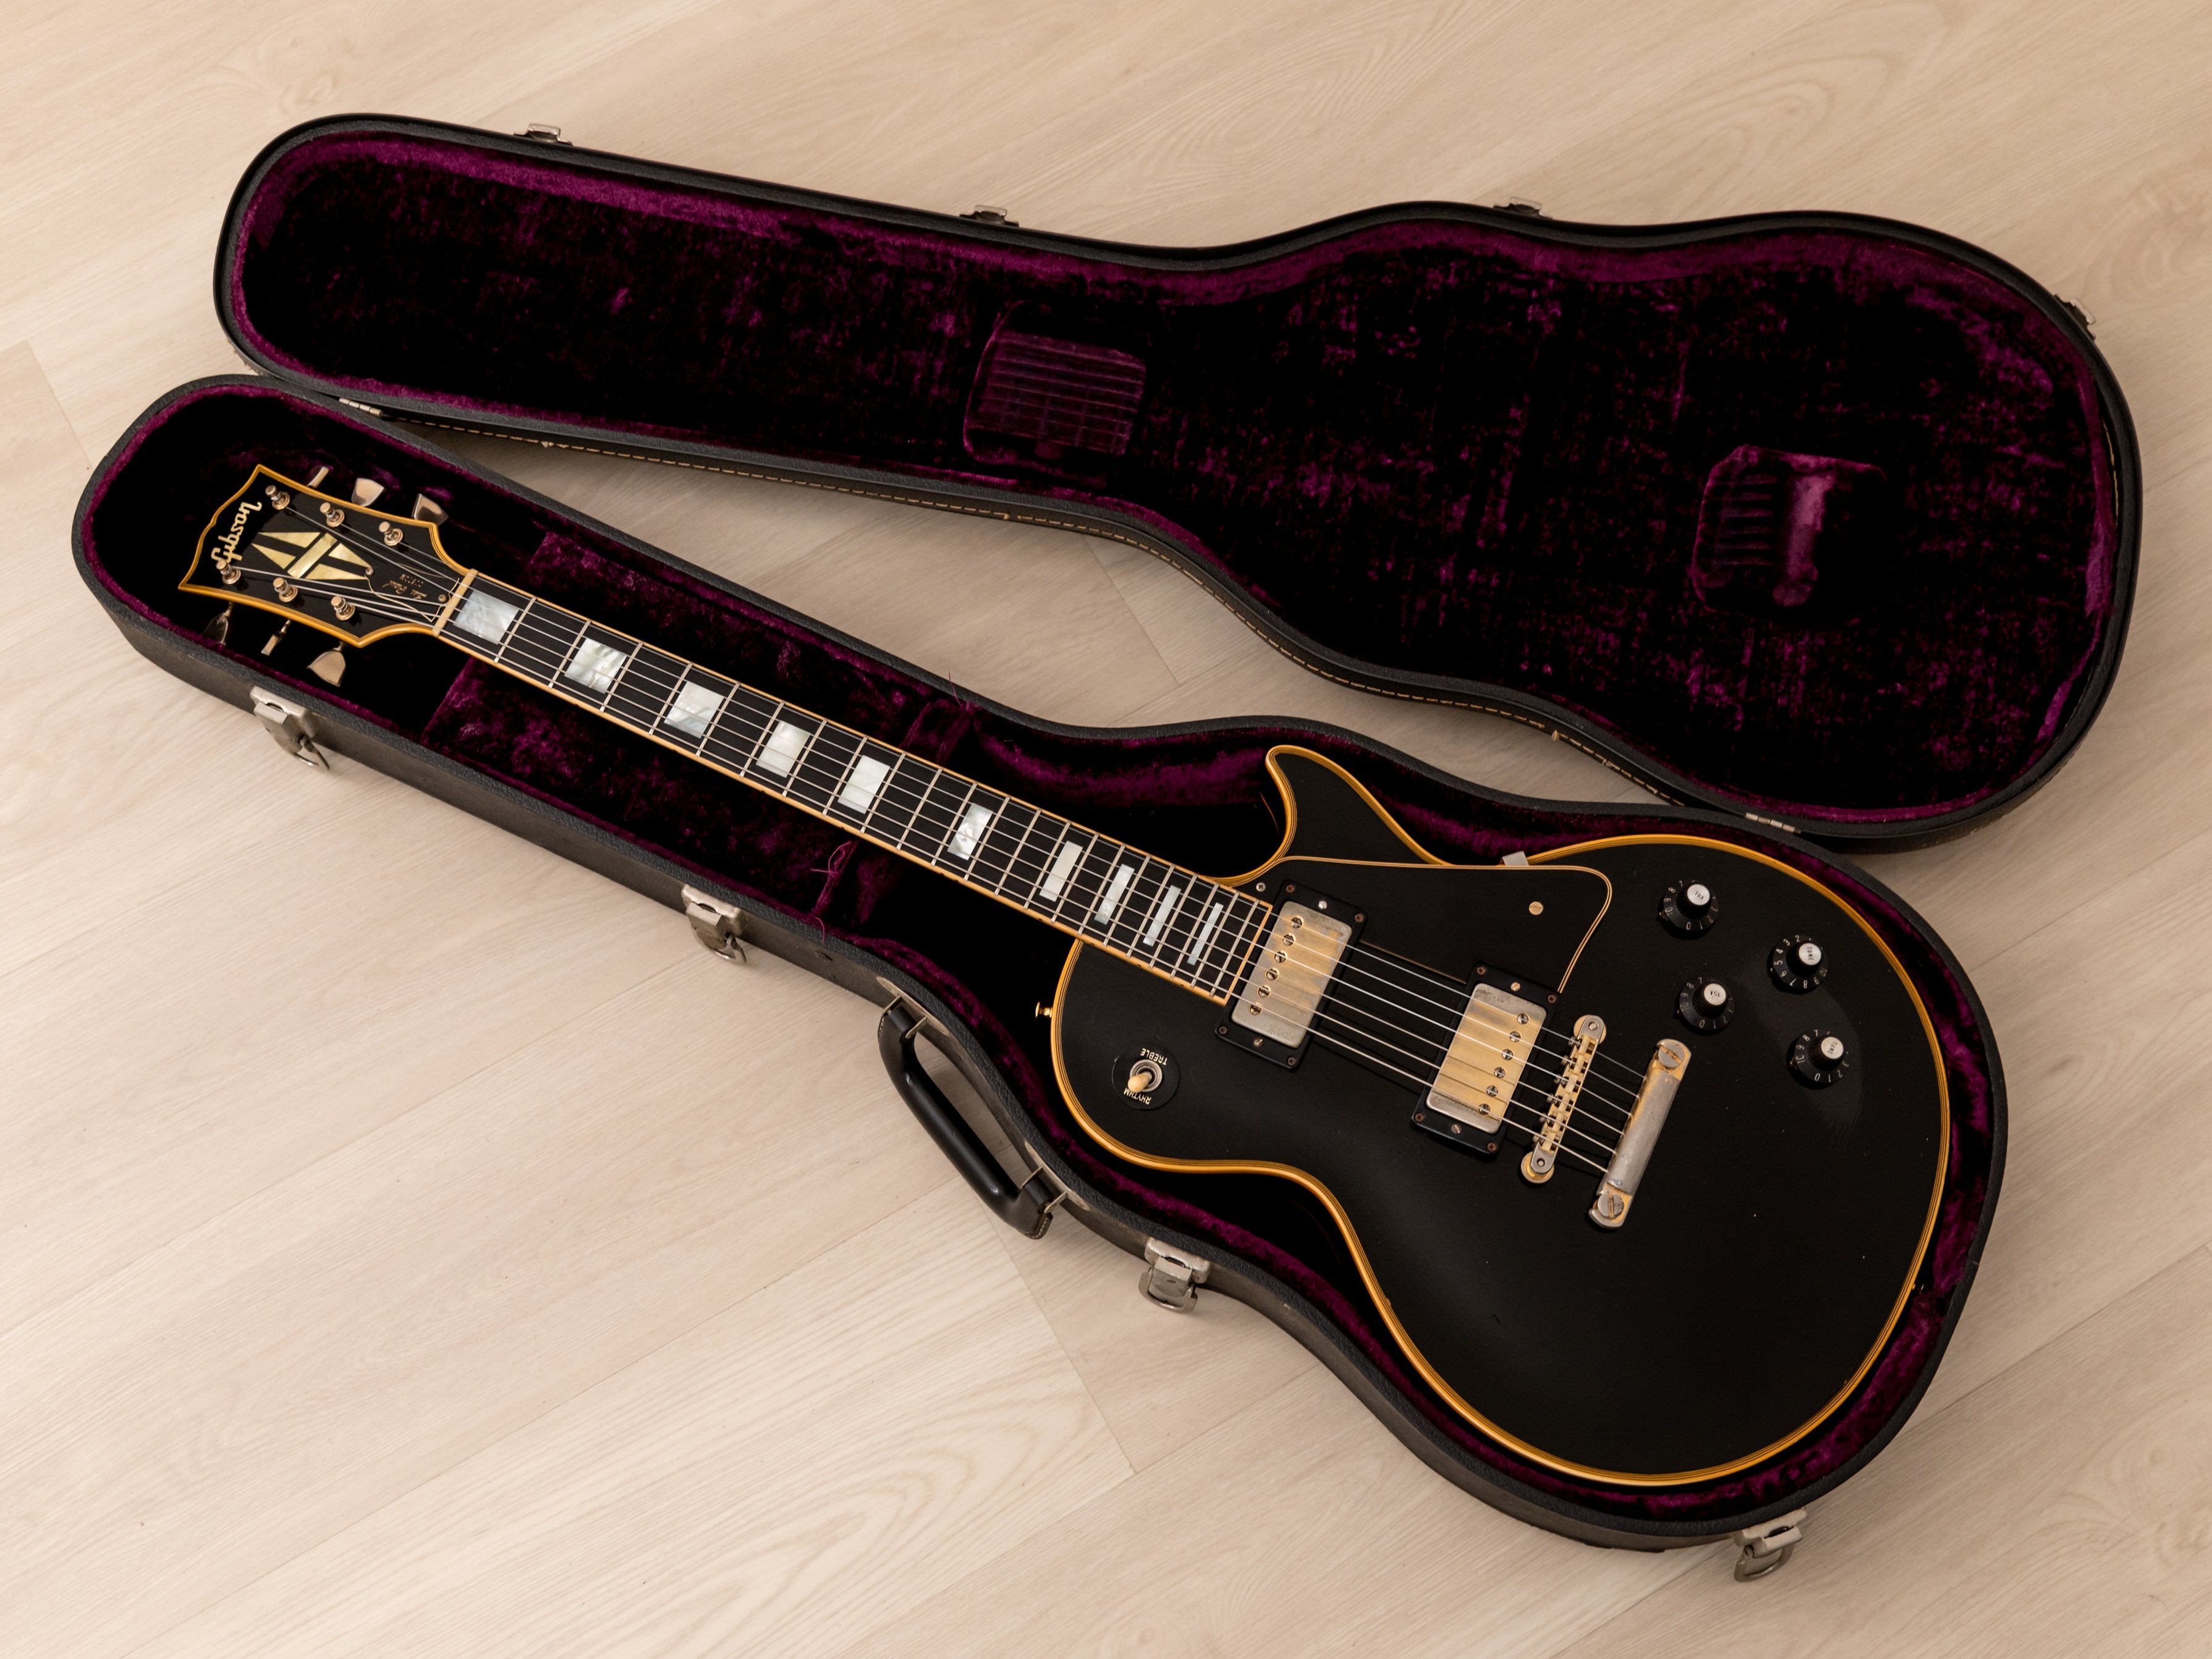 1969 Gibson Les Paul Custom Black Beauty Vintage Electric Guitar w/ Case, Big Neck